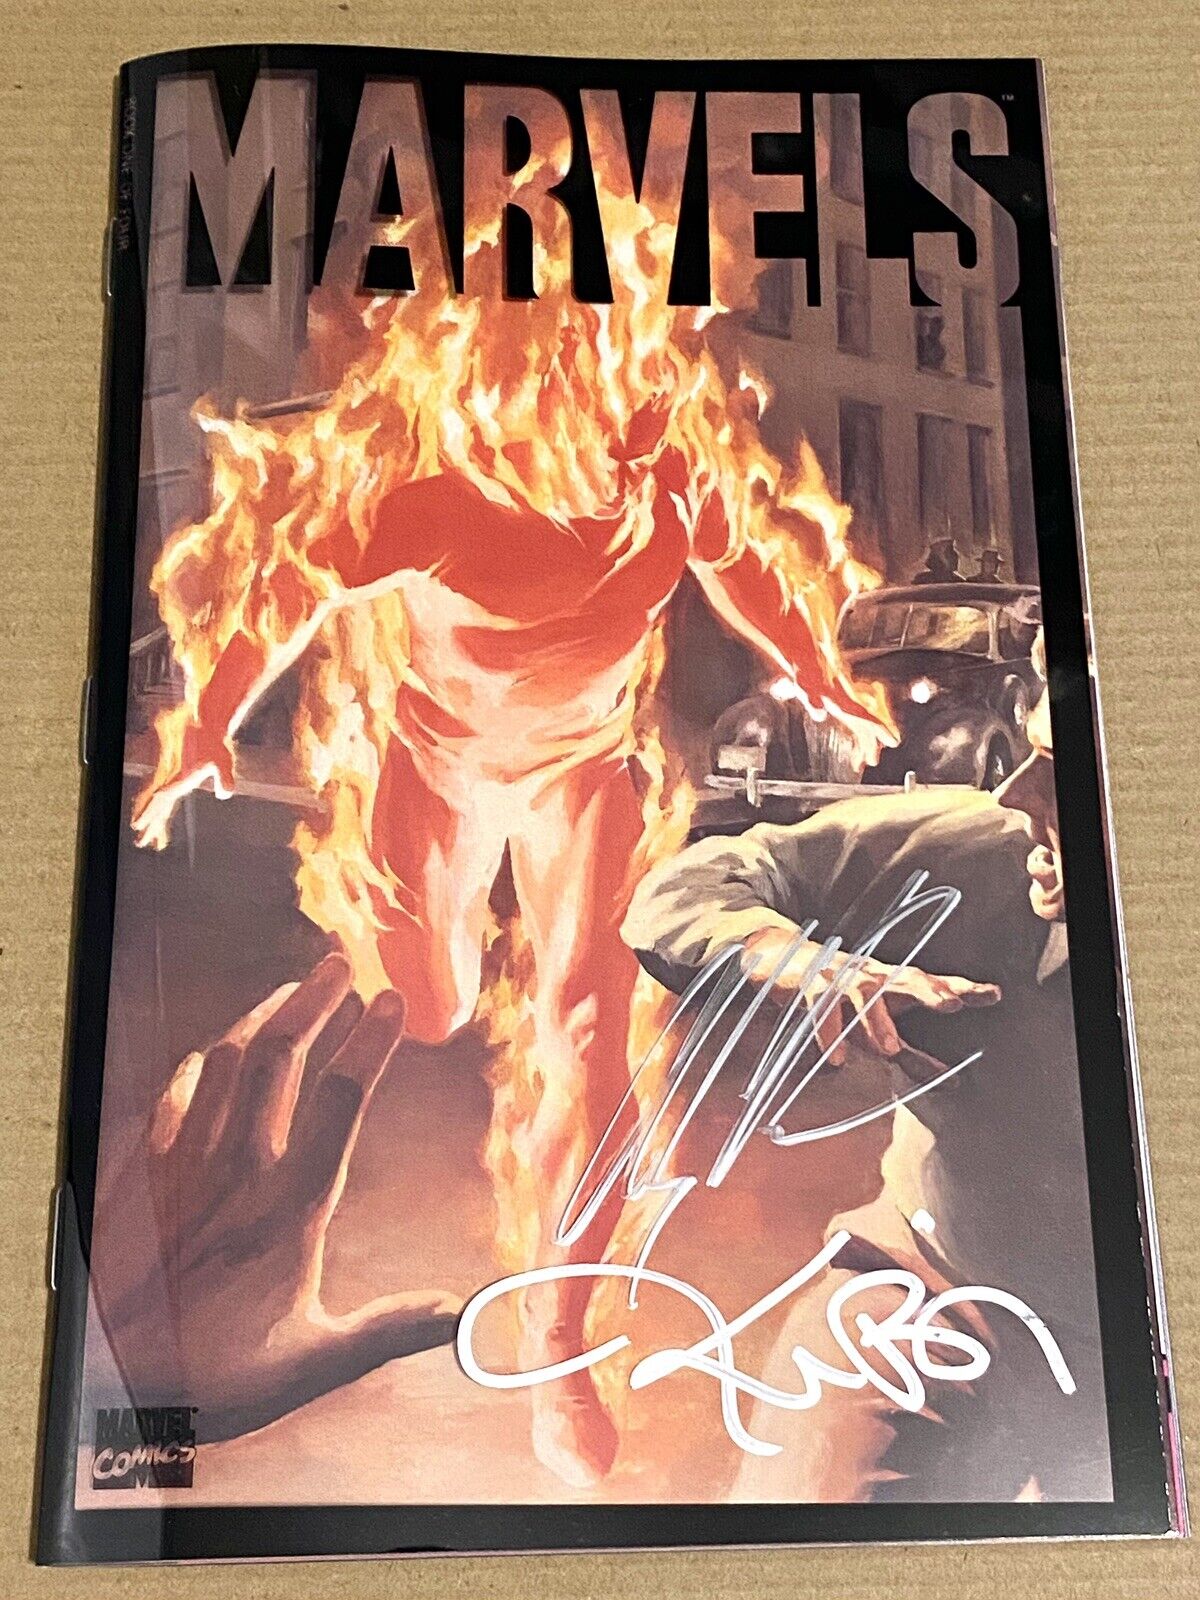 1994 Marvel Comics Marvels #1 Signed By Alex Ross and Kurt Busiek